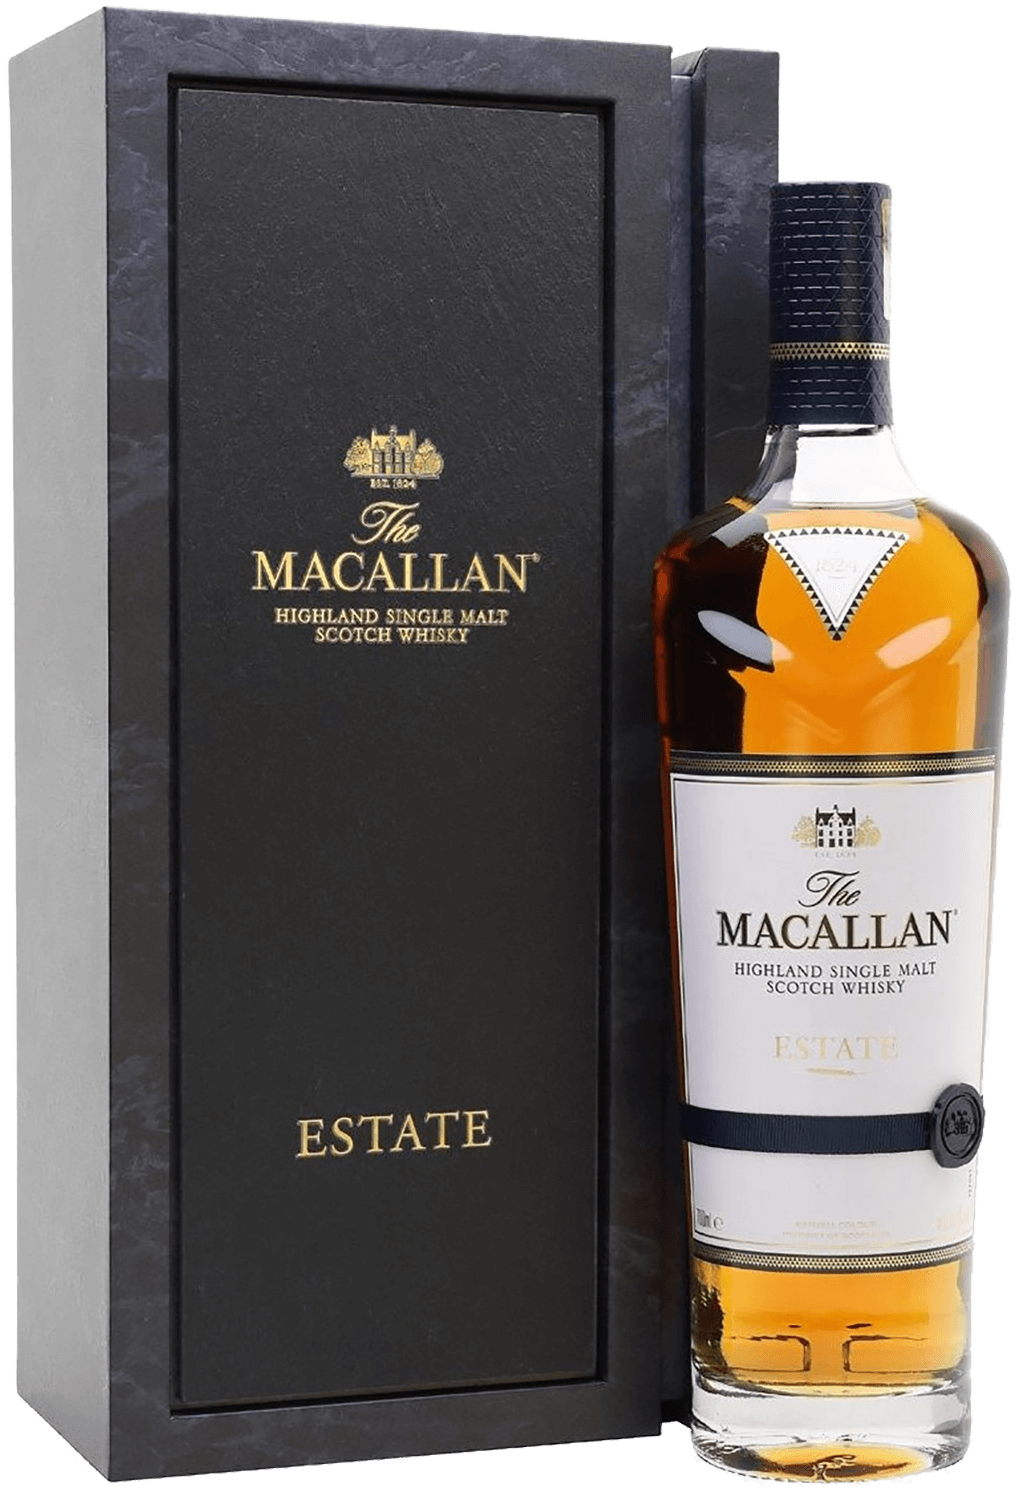 Macallan Estate Highland single malt scotch whisky (gift box) glencadam 1982 single cask highland 30 y o single malt scotch whisky gift box